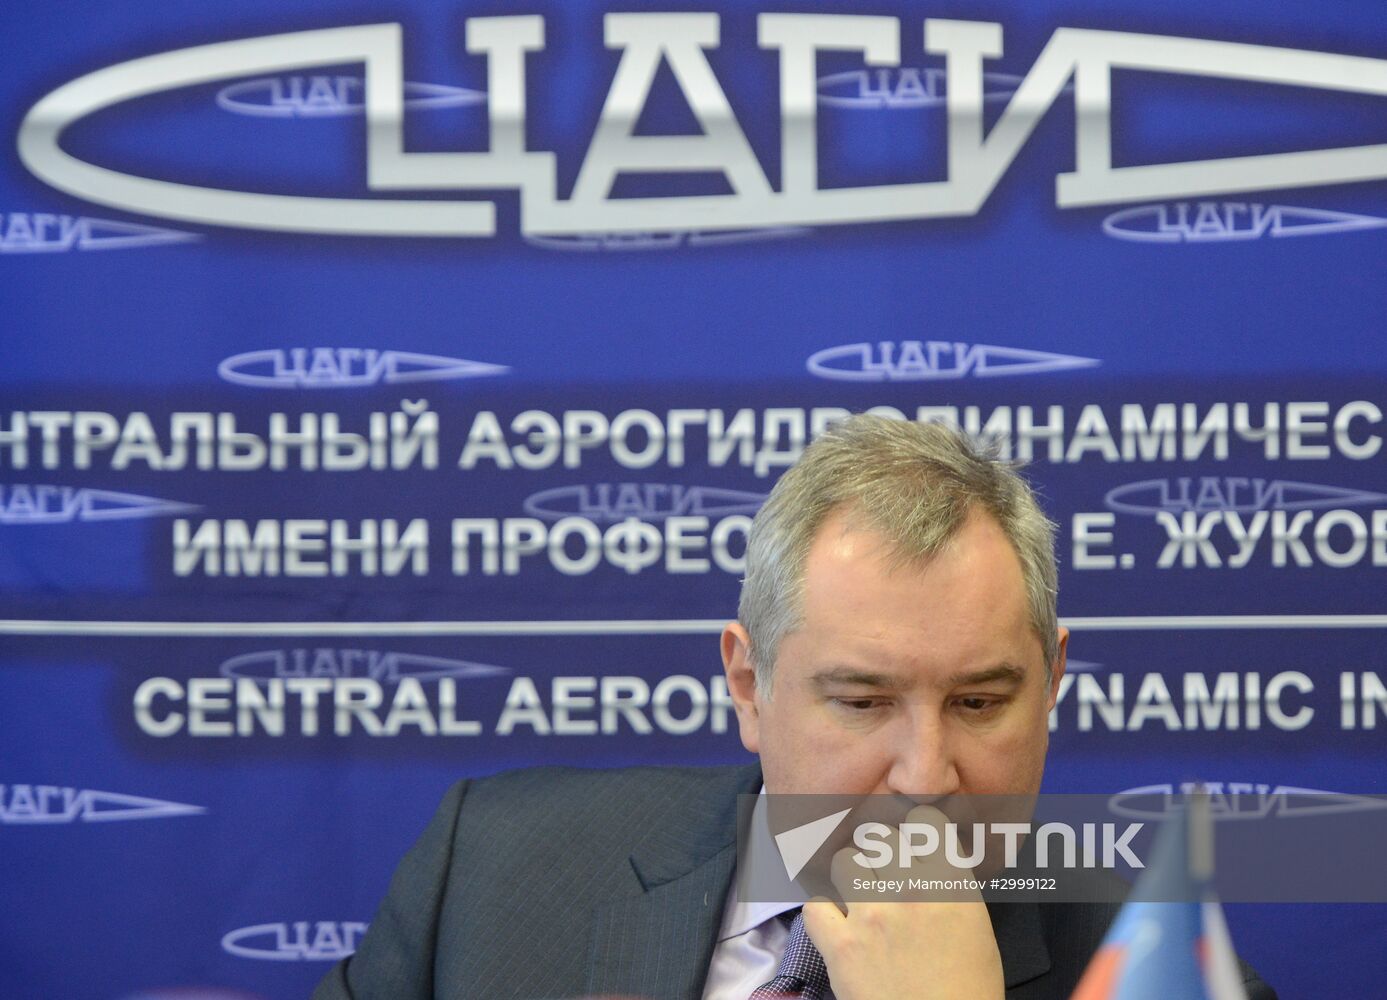 Deputy Prime Minister Dmitry Rogozin visits Central Aerohydrodynamic Institute